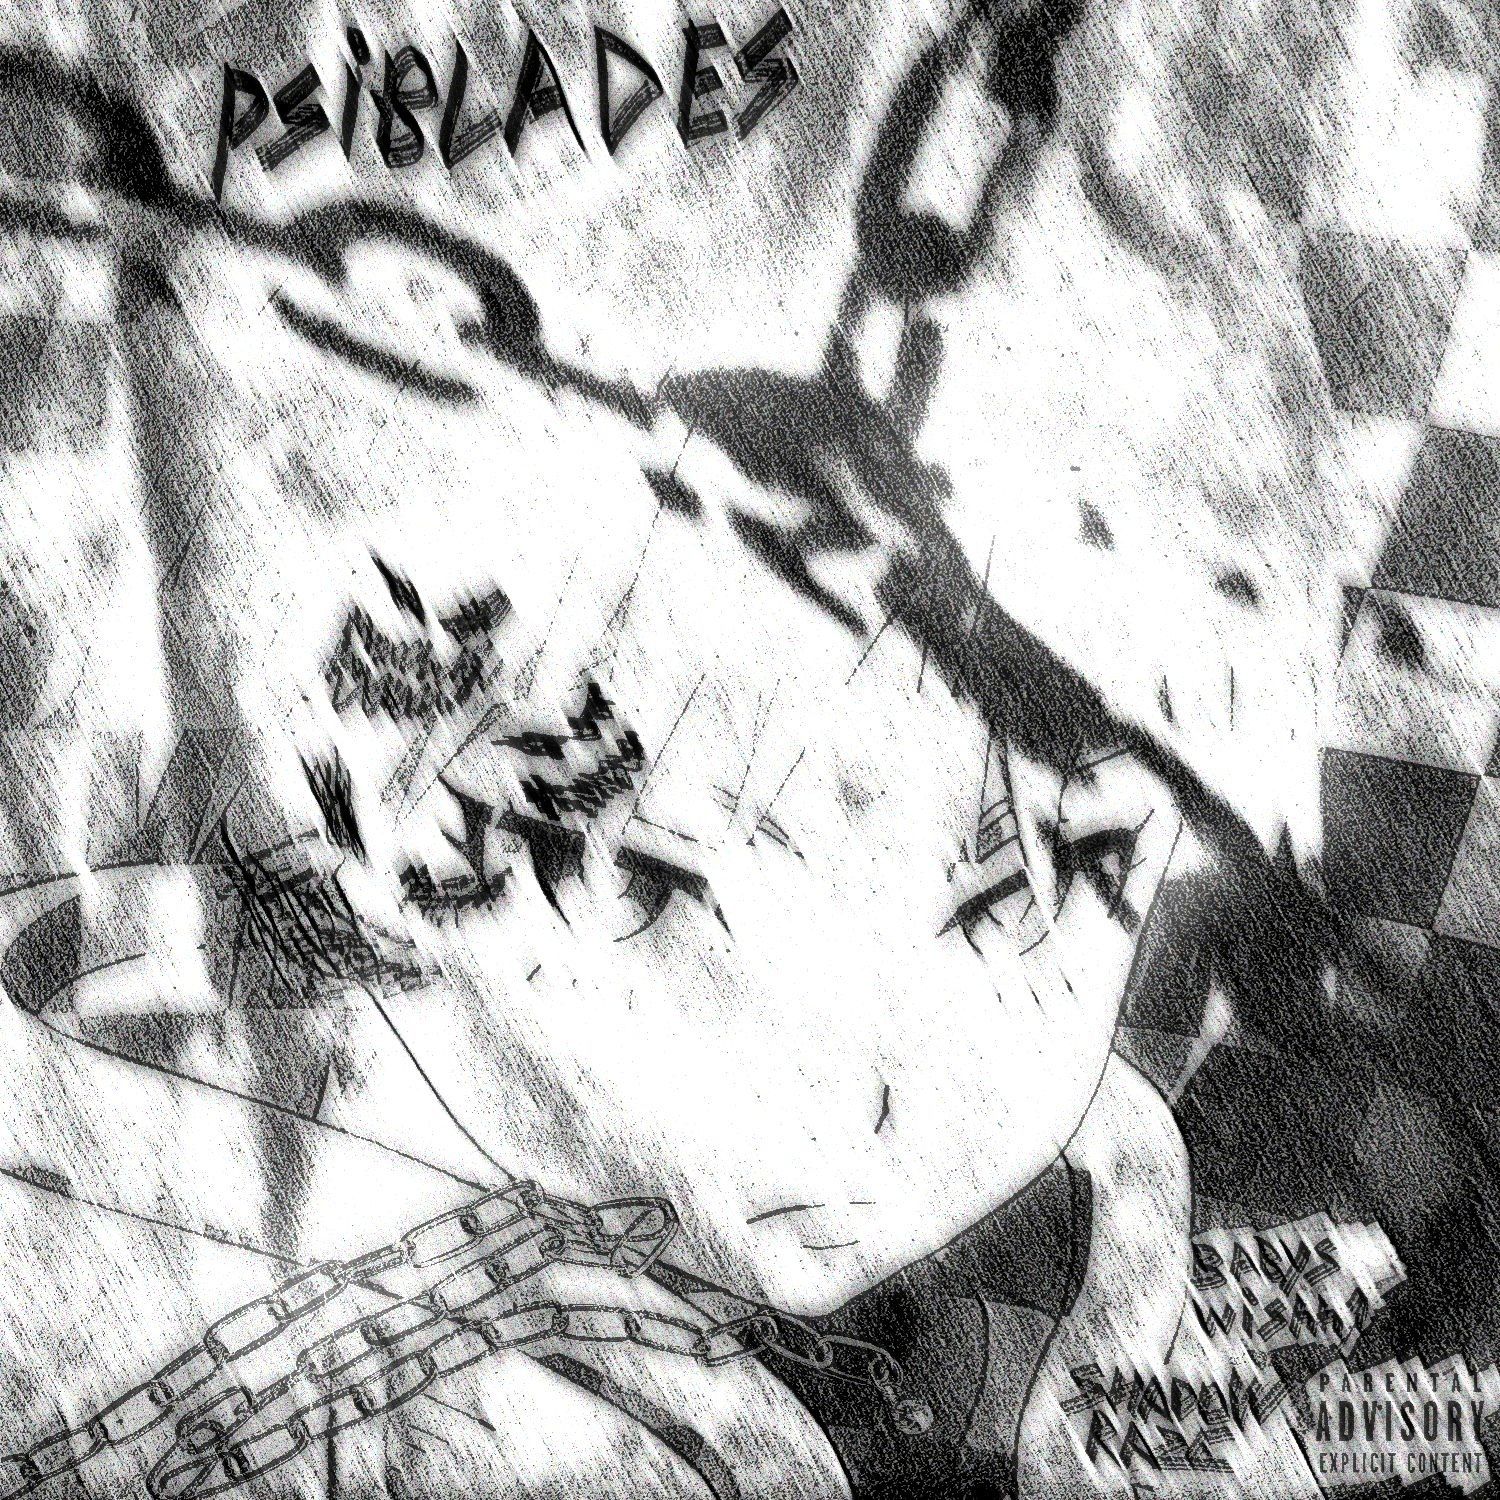 Download Psiblades